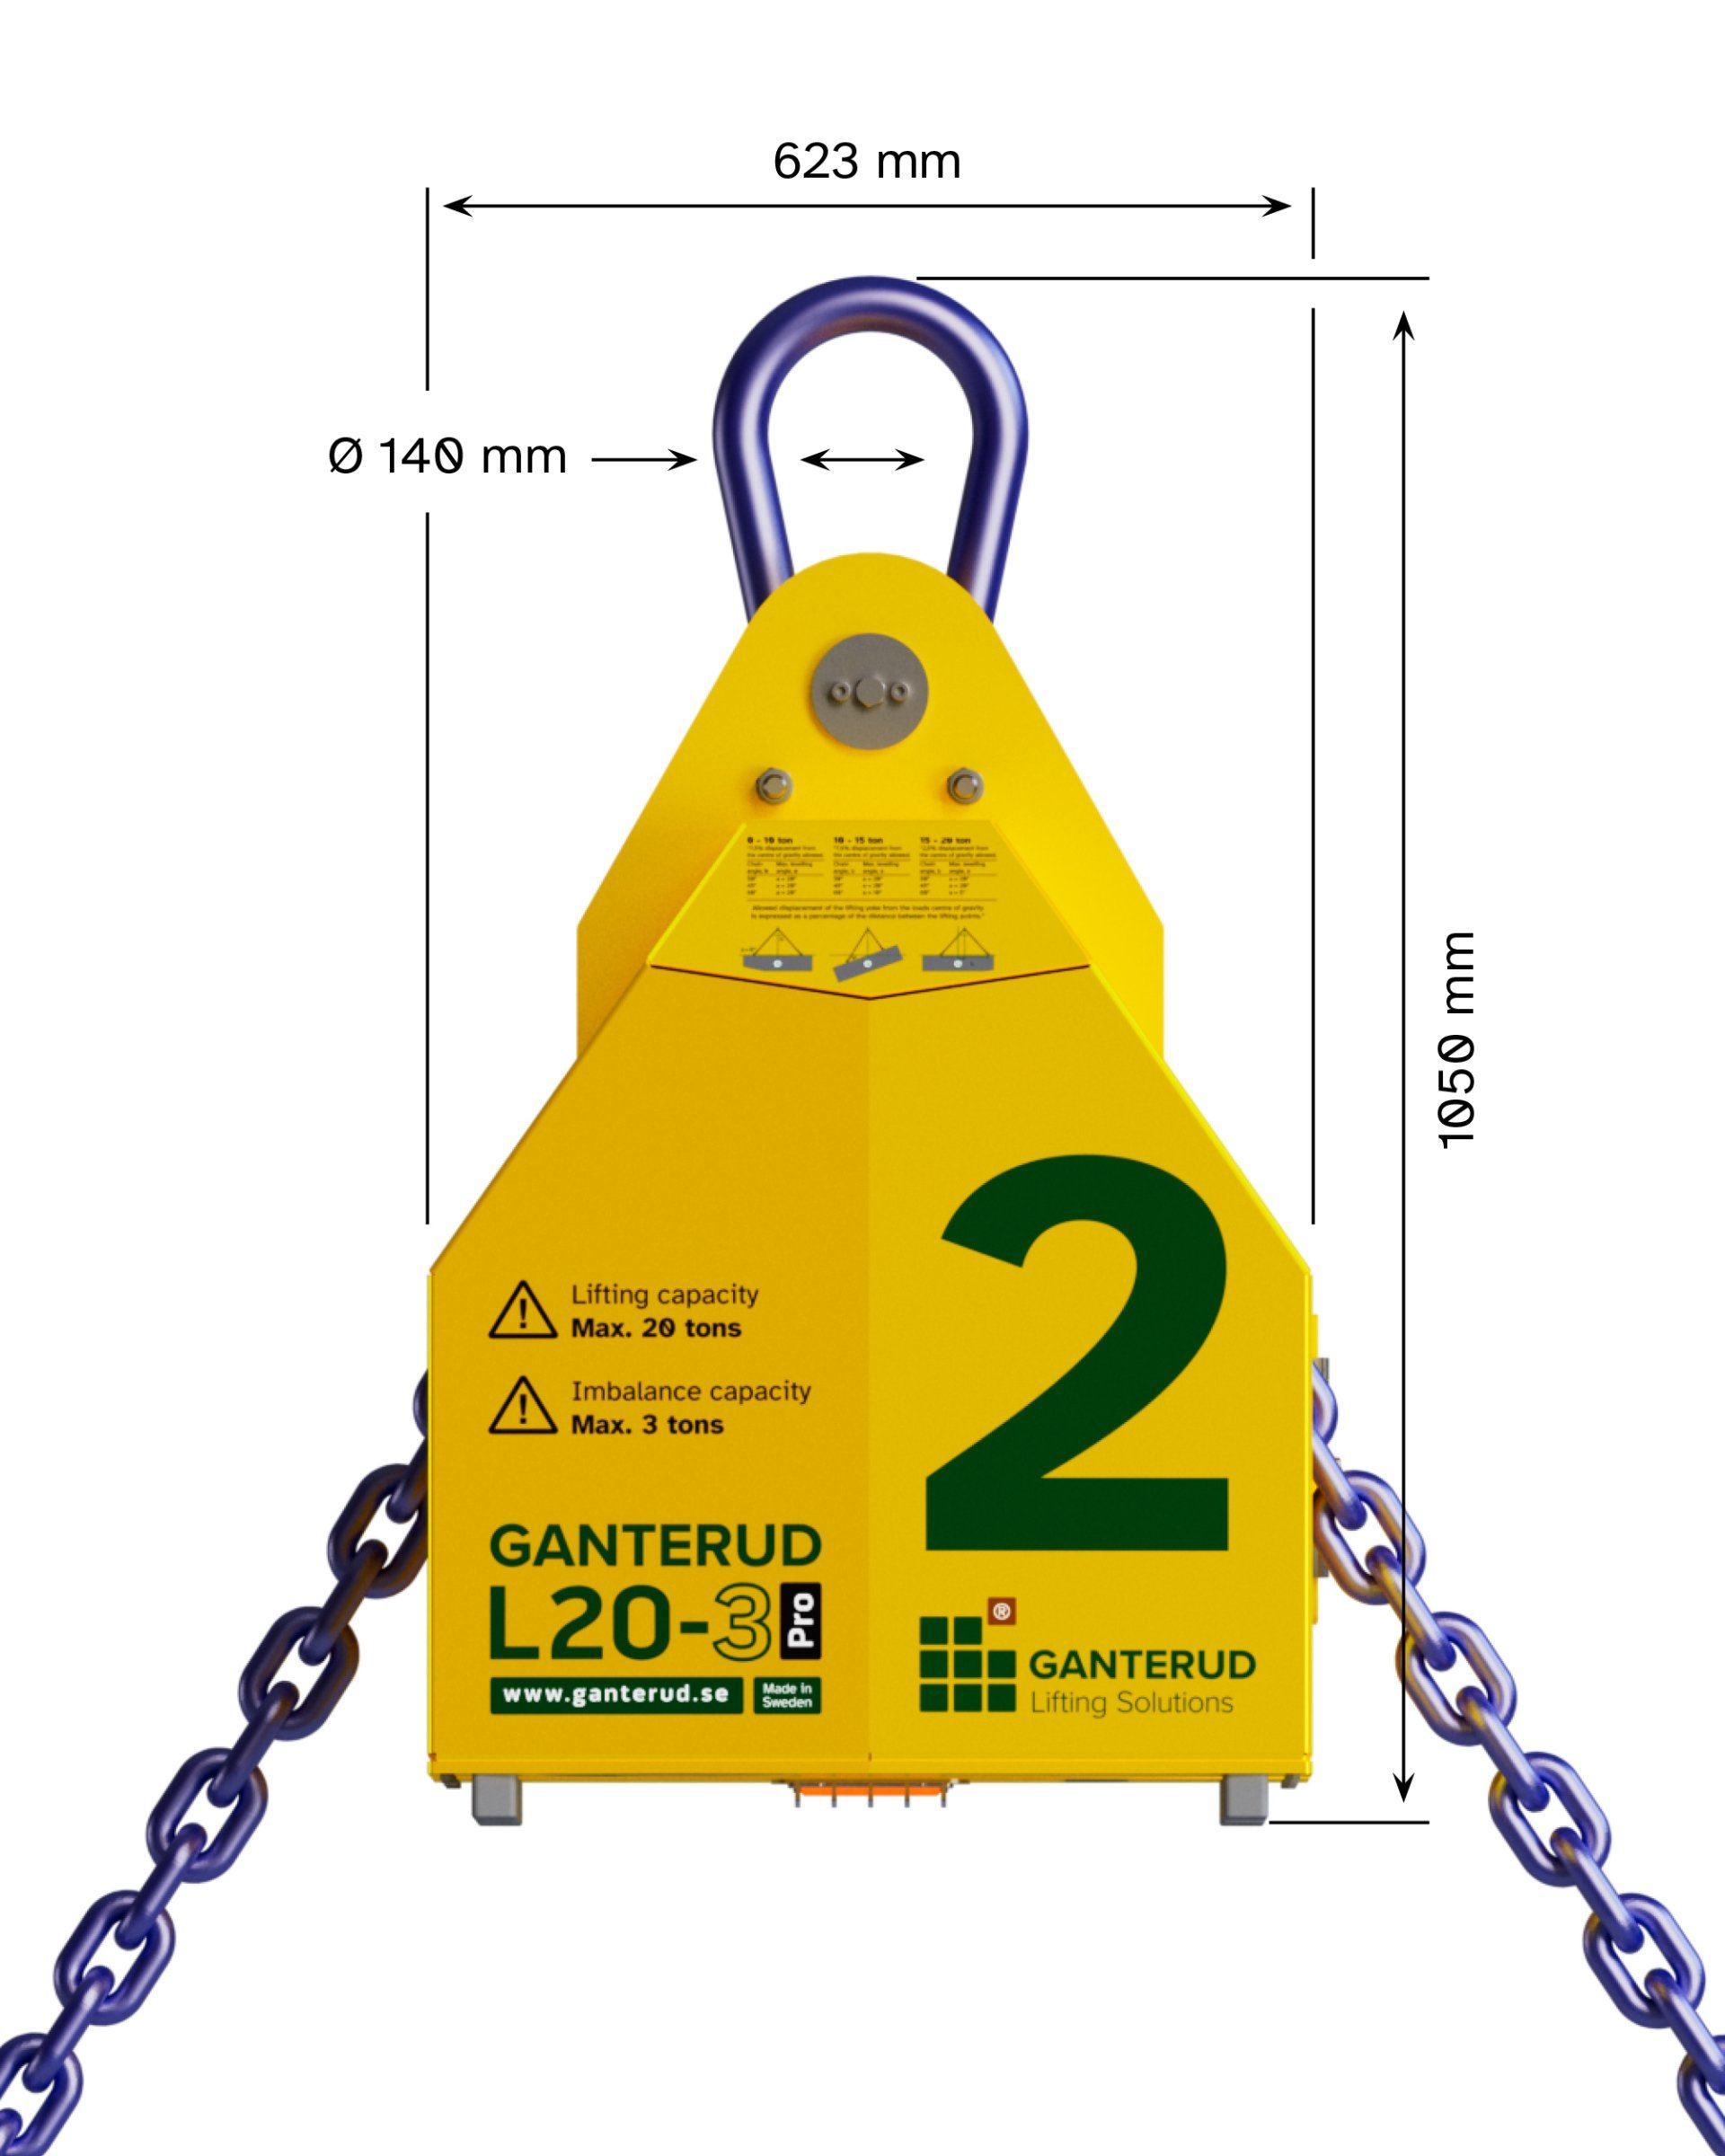 Ganterud L20-3 Pro Lifting yoke measurements